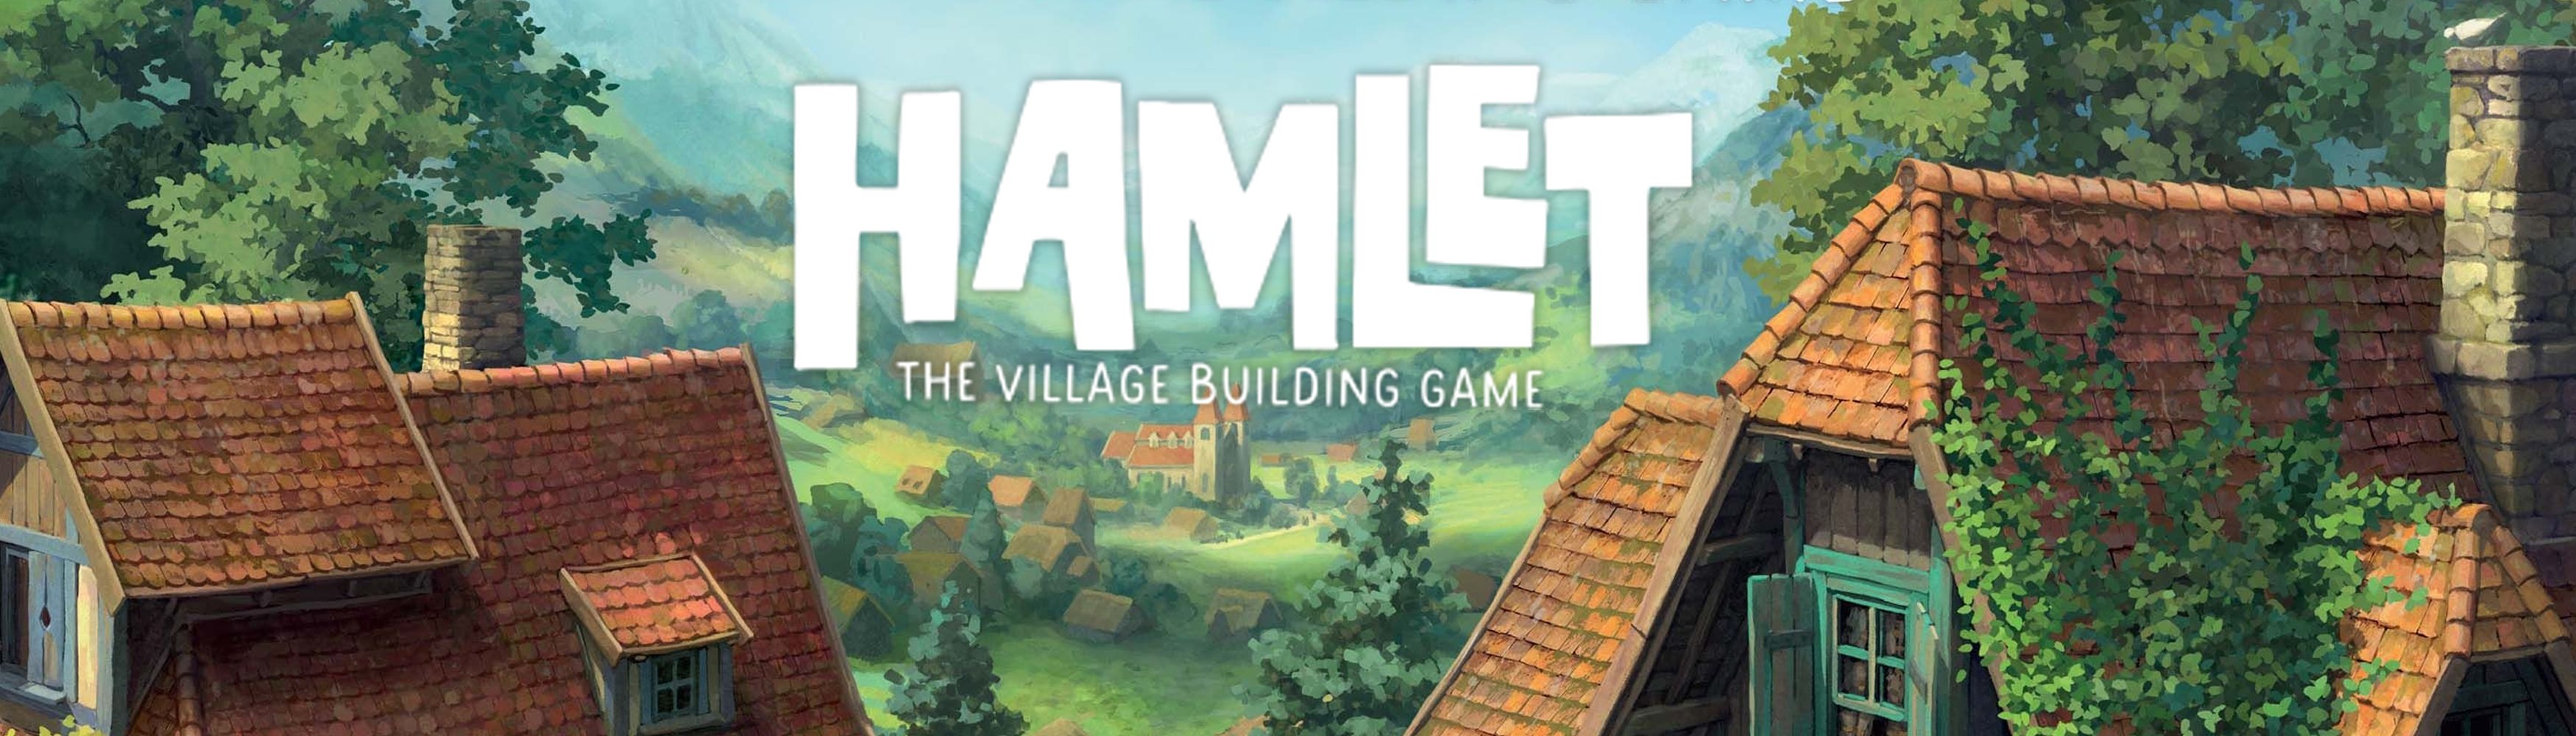 Hamlet The Village Building Game 